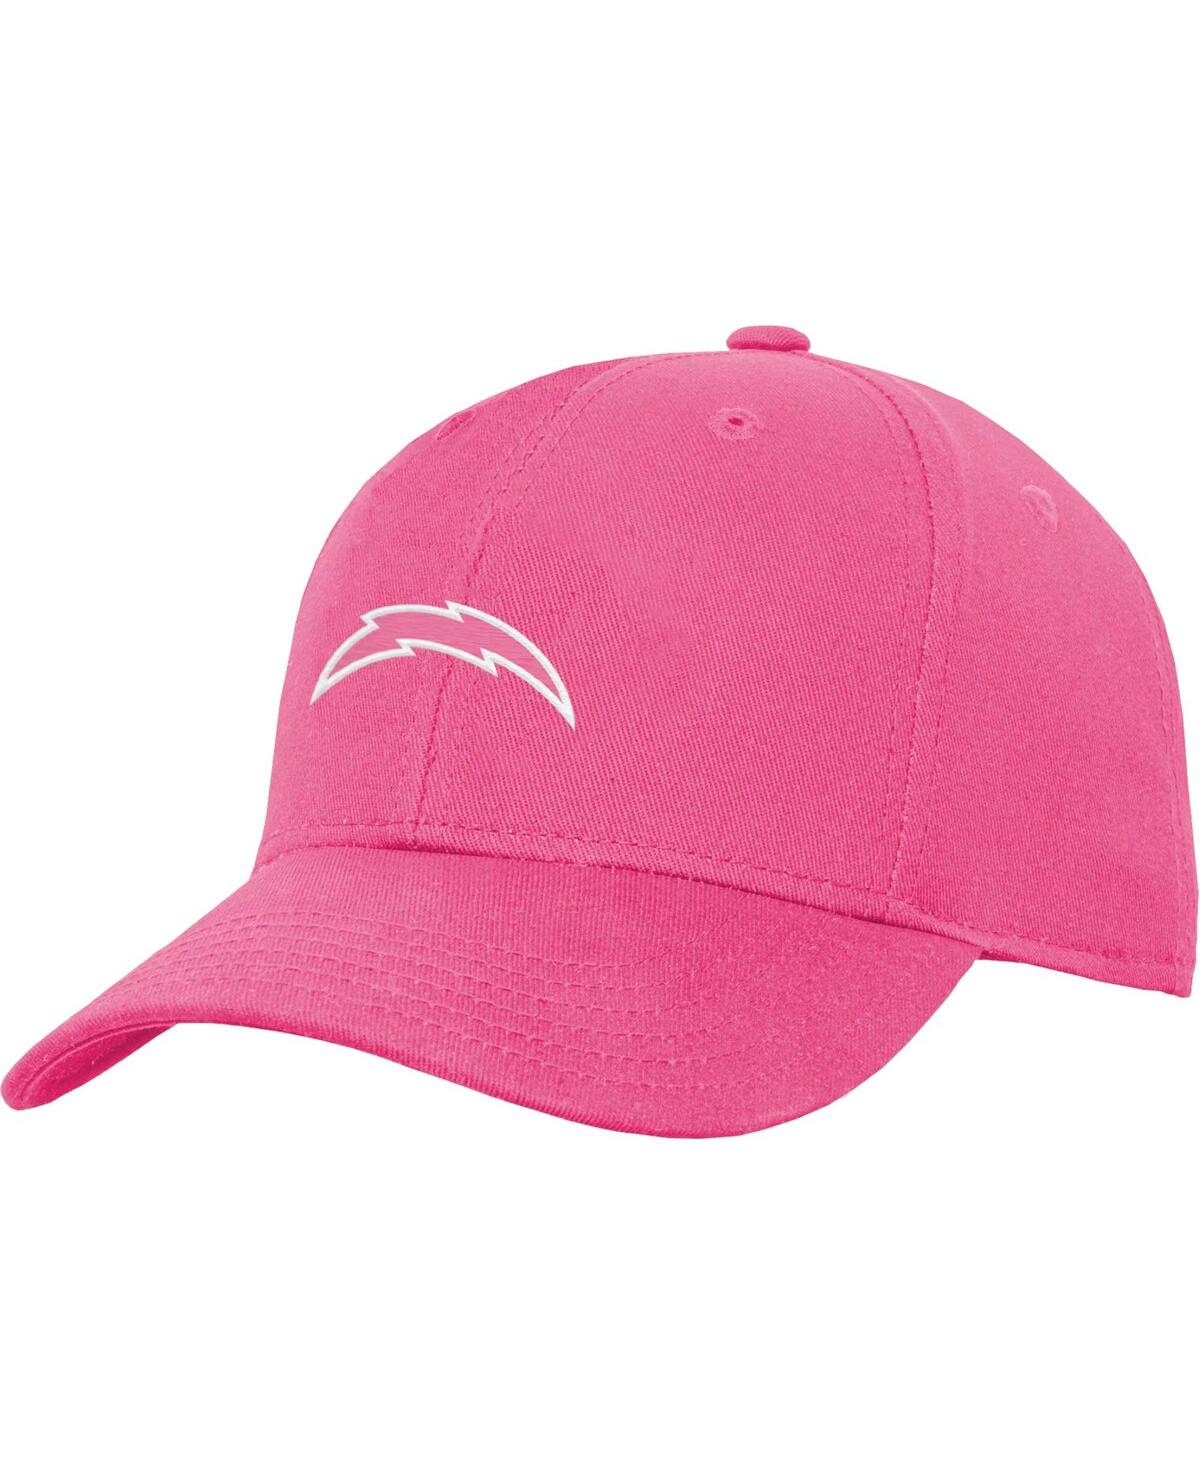 Outerstuff Kids' Big Girls Pink Los Angeles Chargers Adjustable Hat